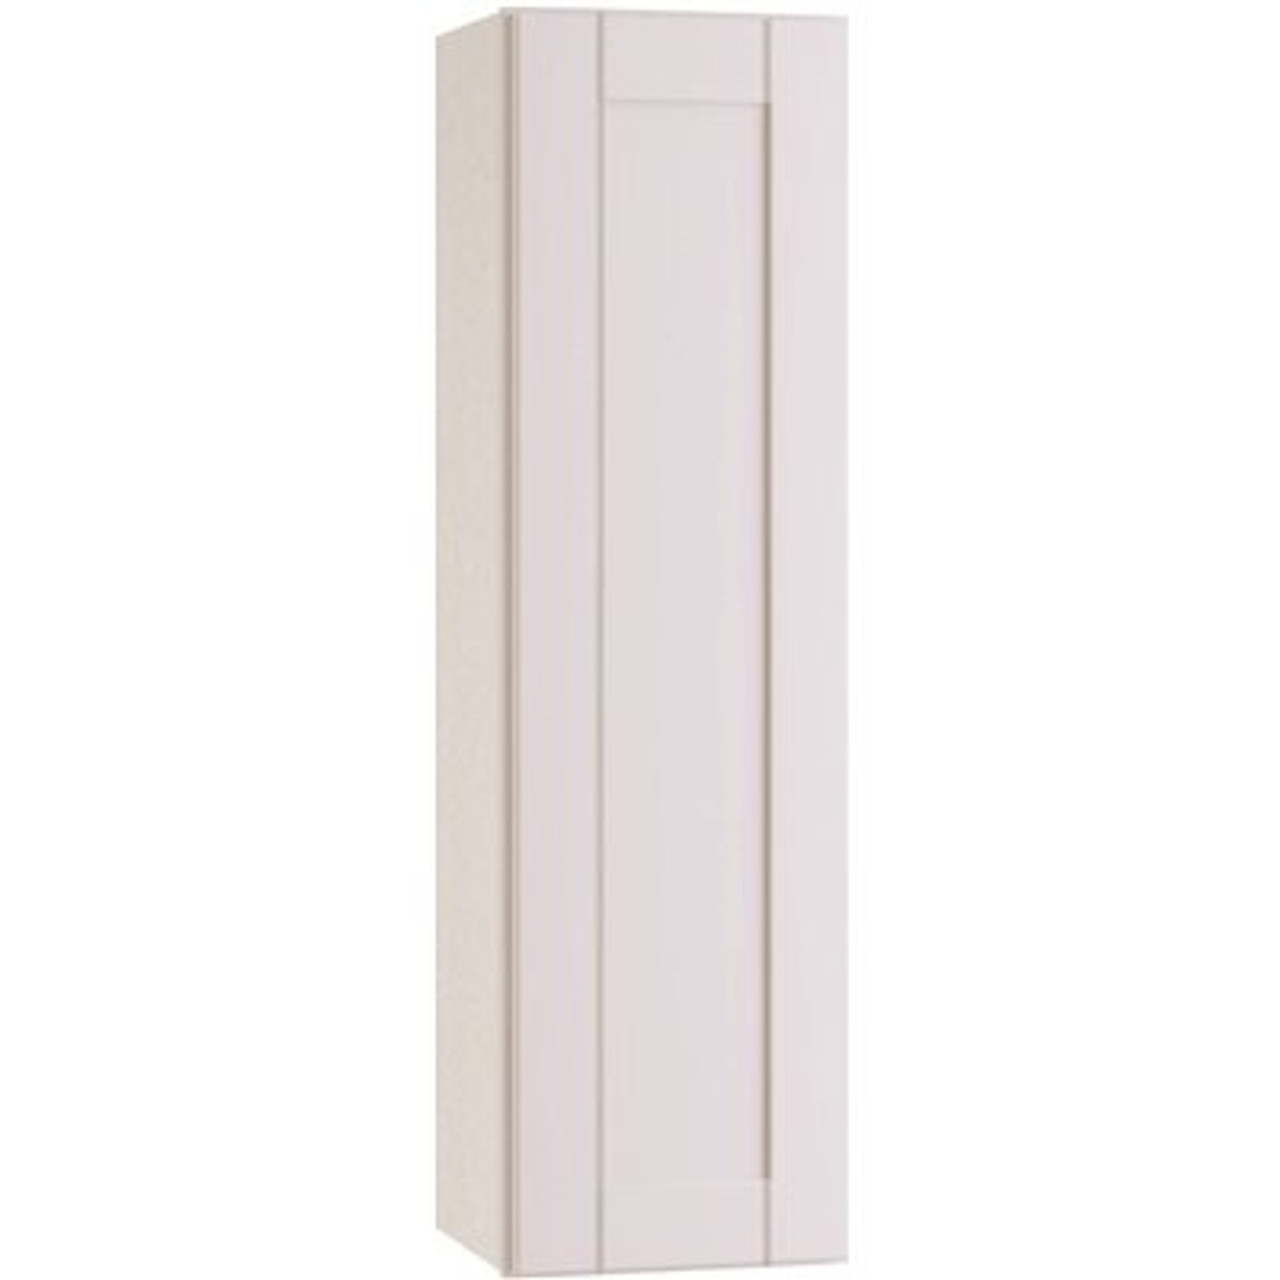 Richmond Shaker Rta Wall Cabinet, Single, Verona White, 12"x36"x12"